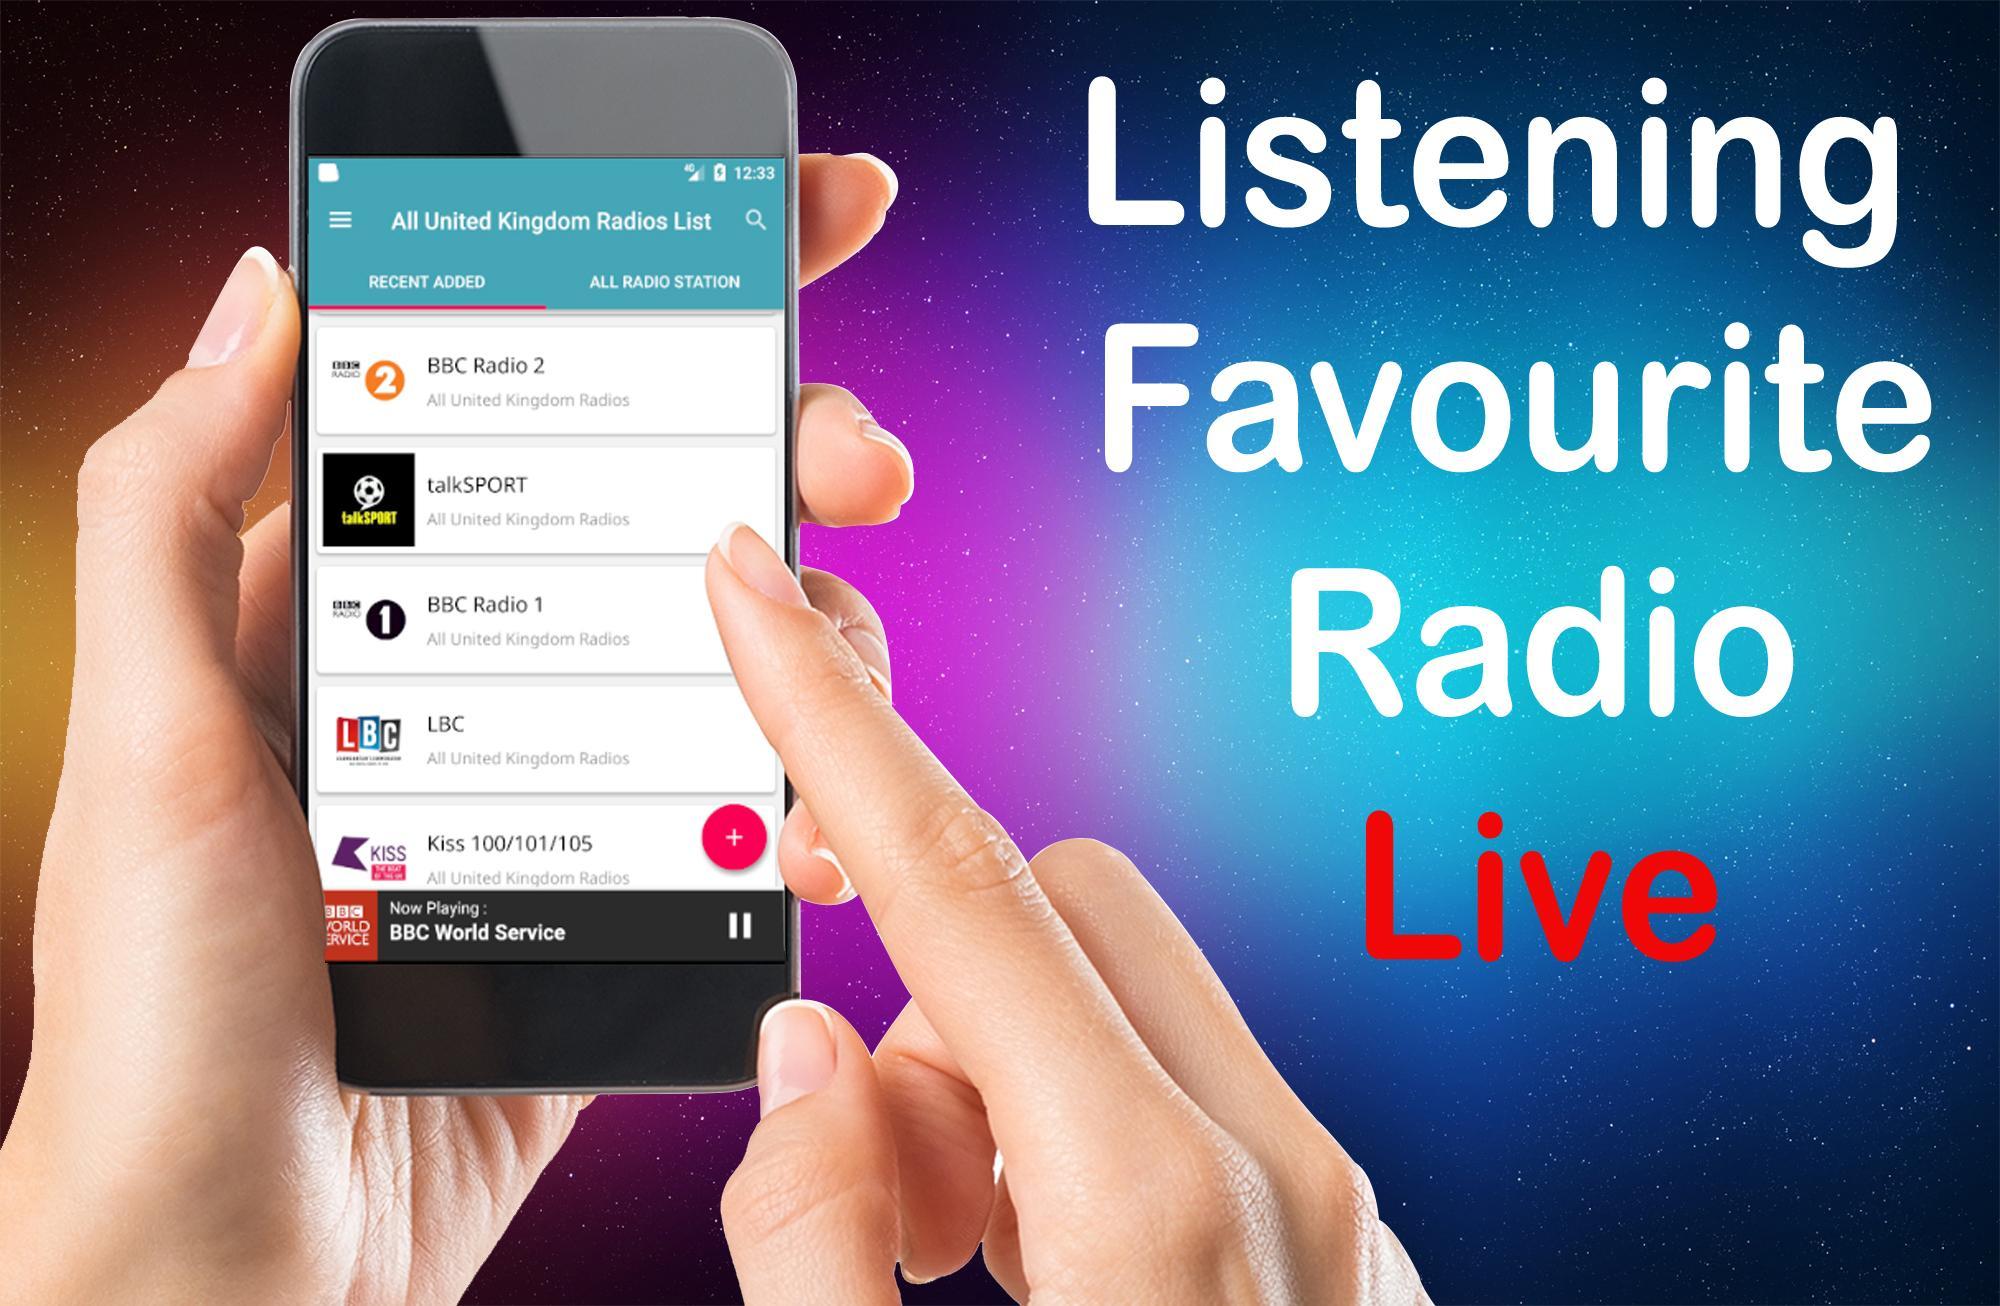 Radio UK - All United Kingdom Radios – GBR Radios APK for Android Download